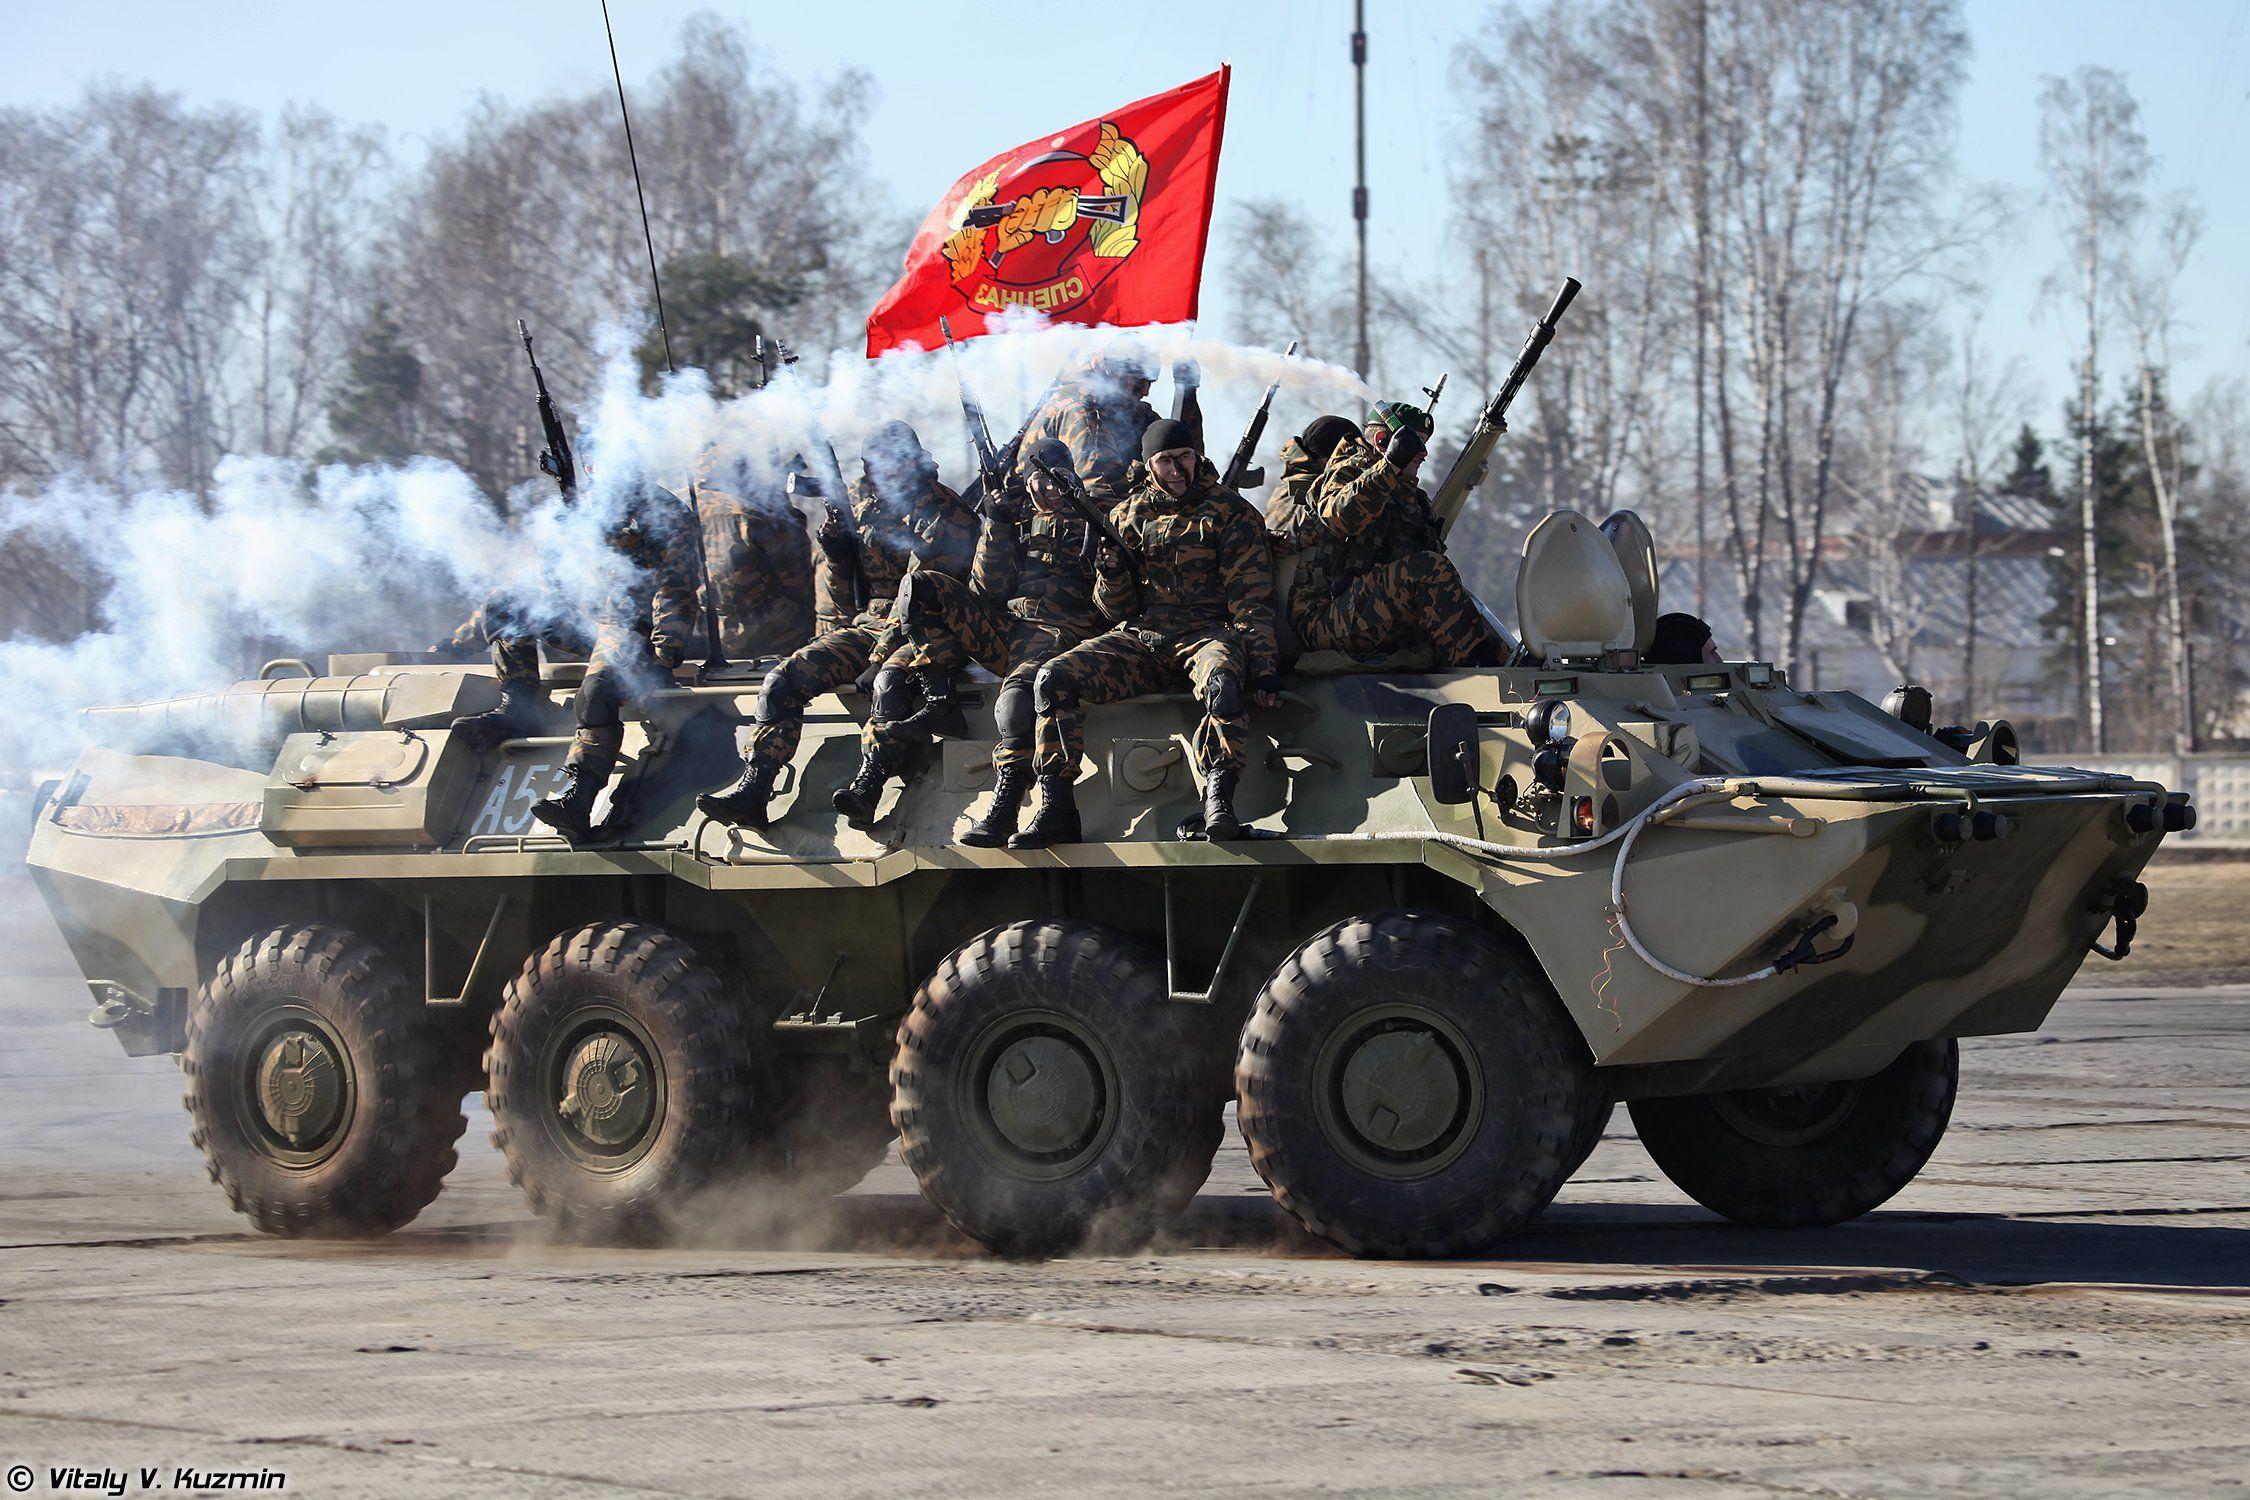 BTR 80 Armored 33rd Special Purpose Unit Peresvet Russian Police